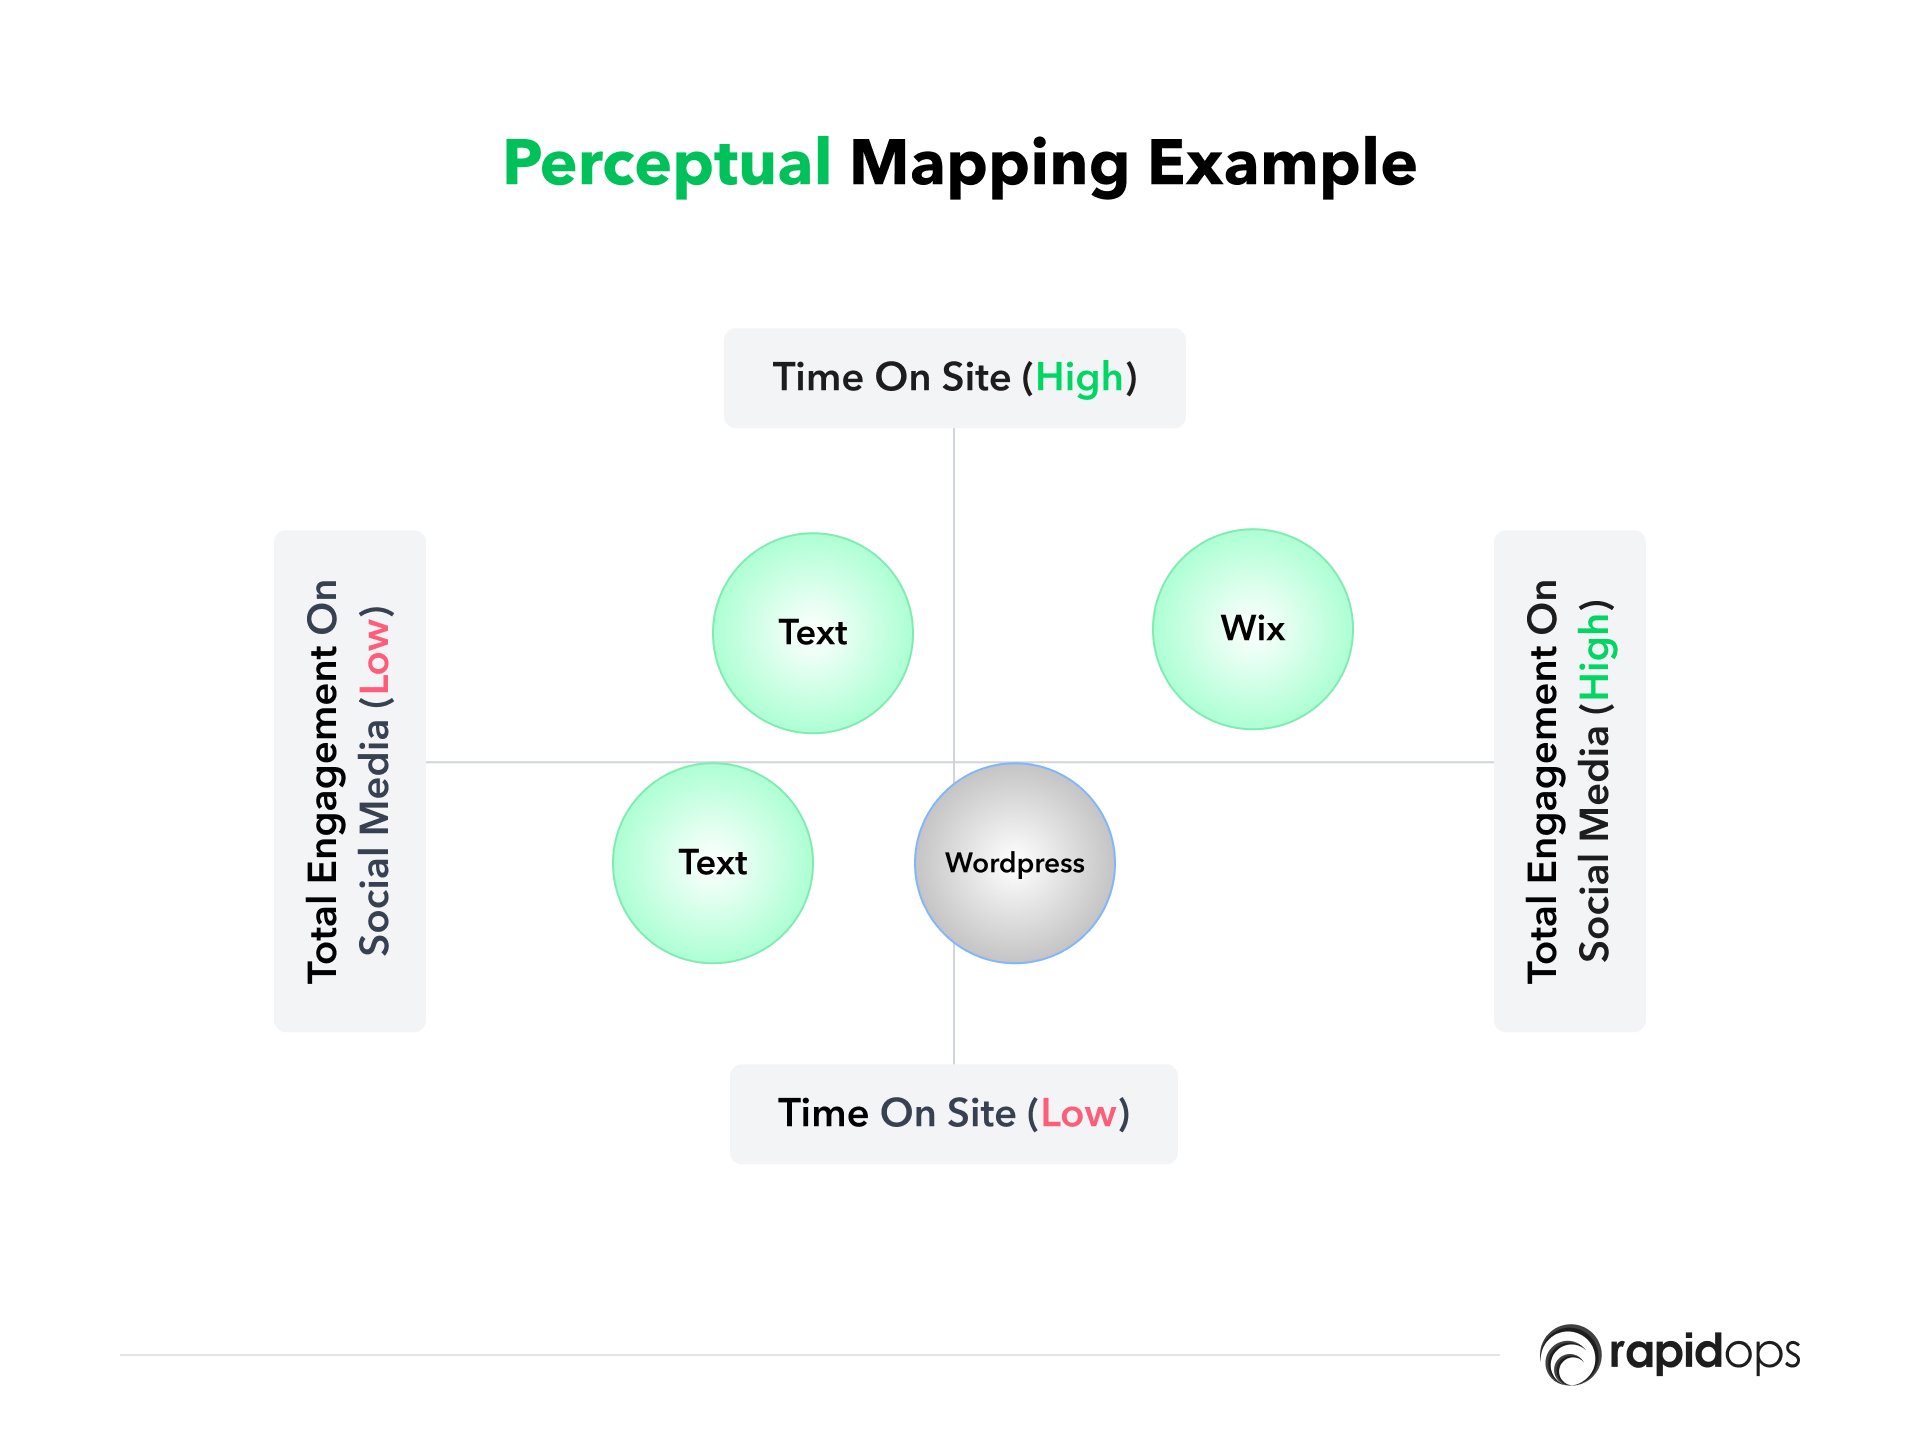 Visualizing consumer perception through perceptual mapping